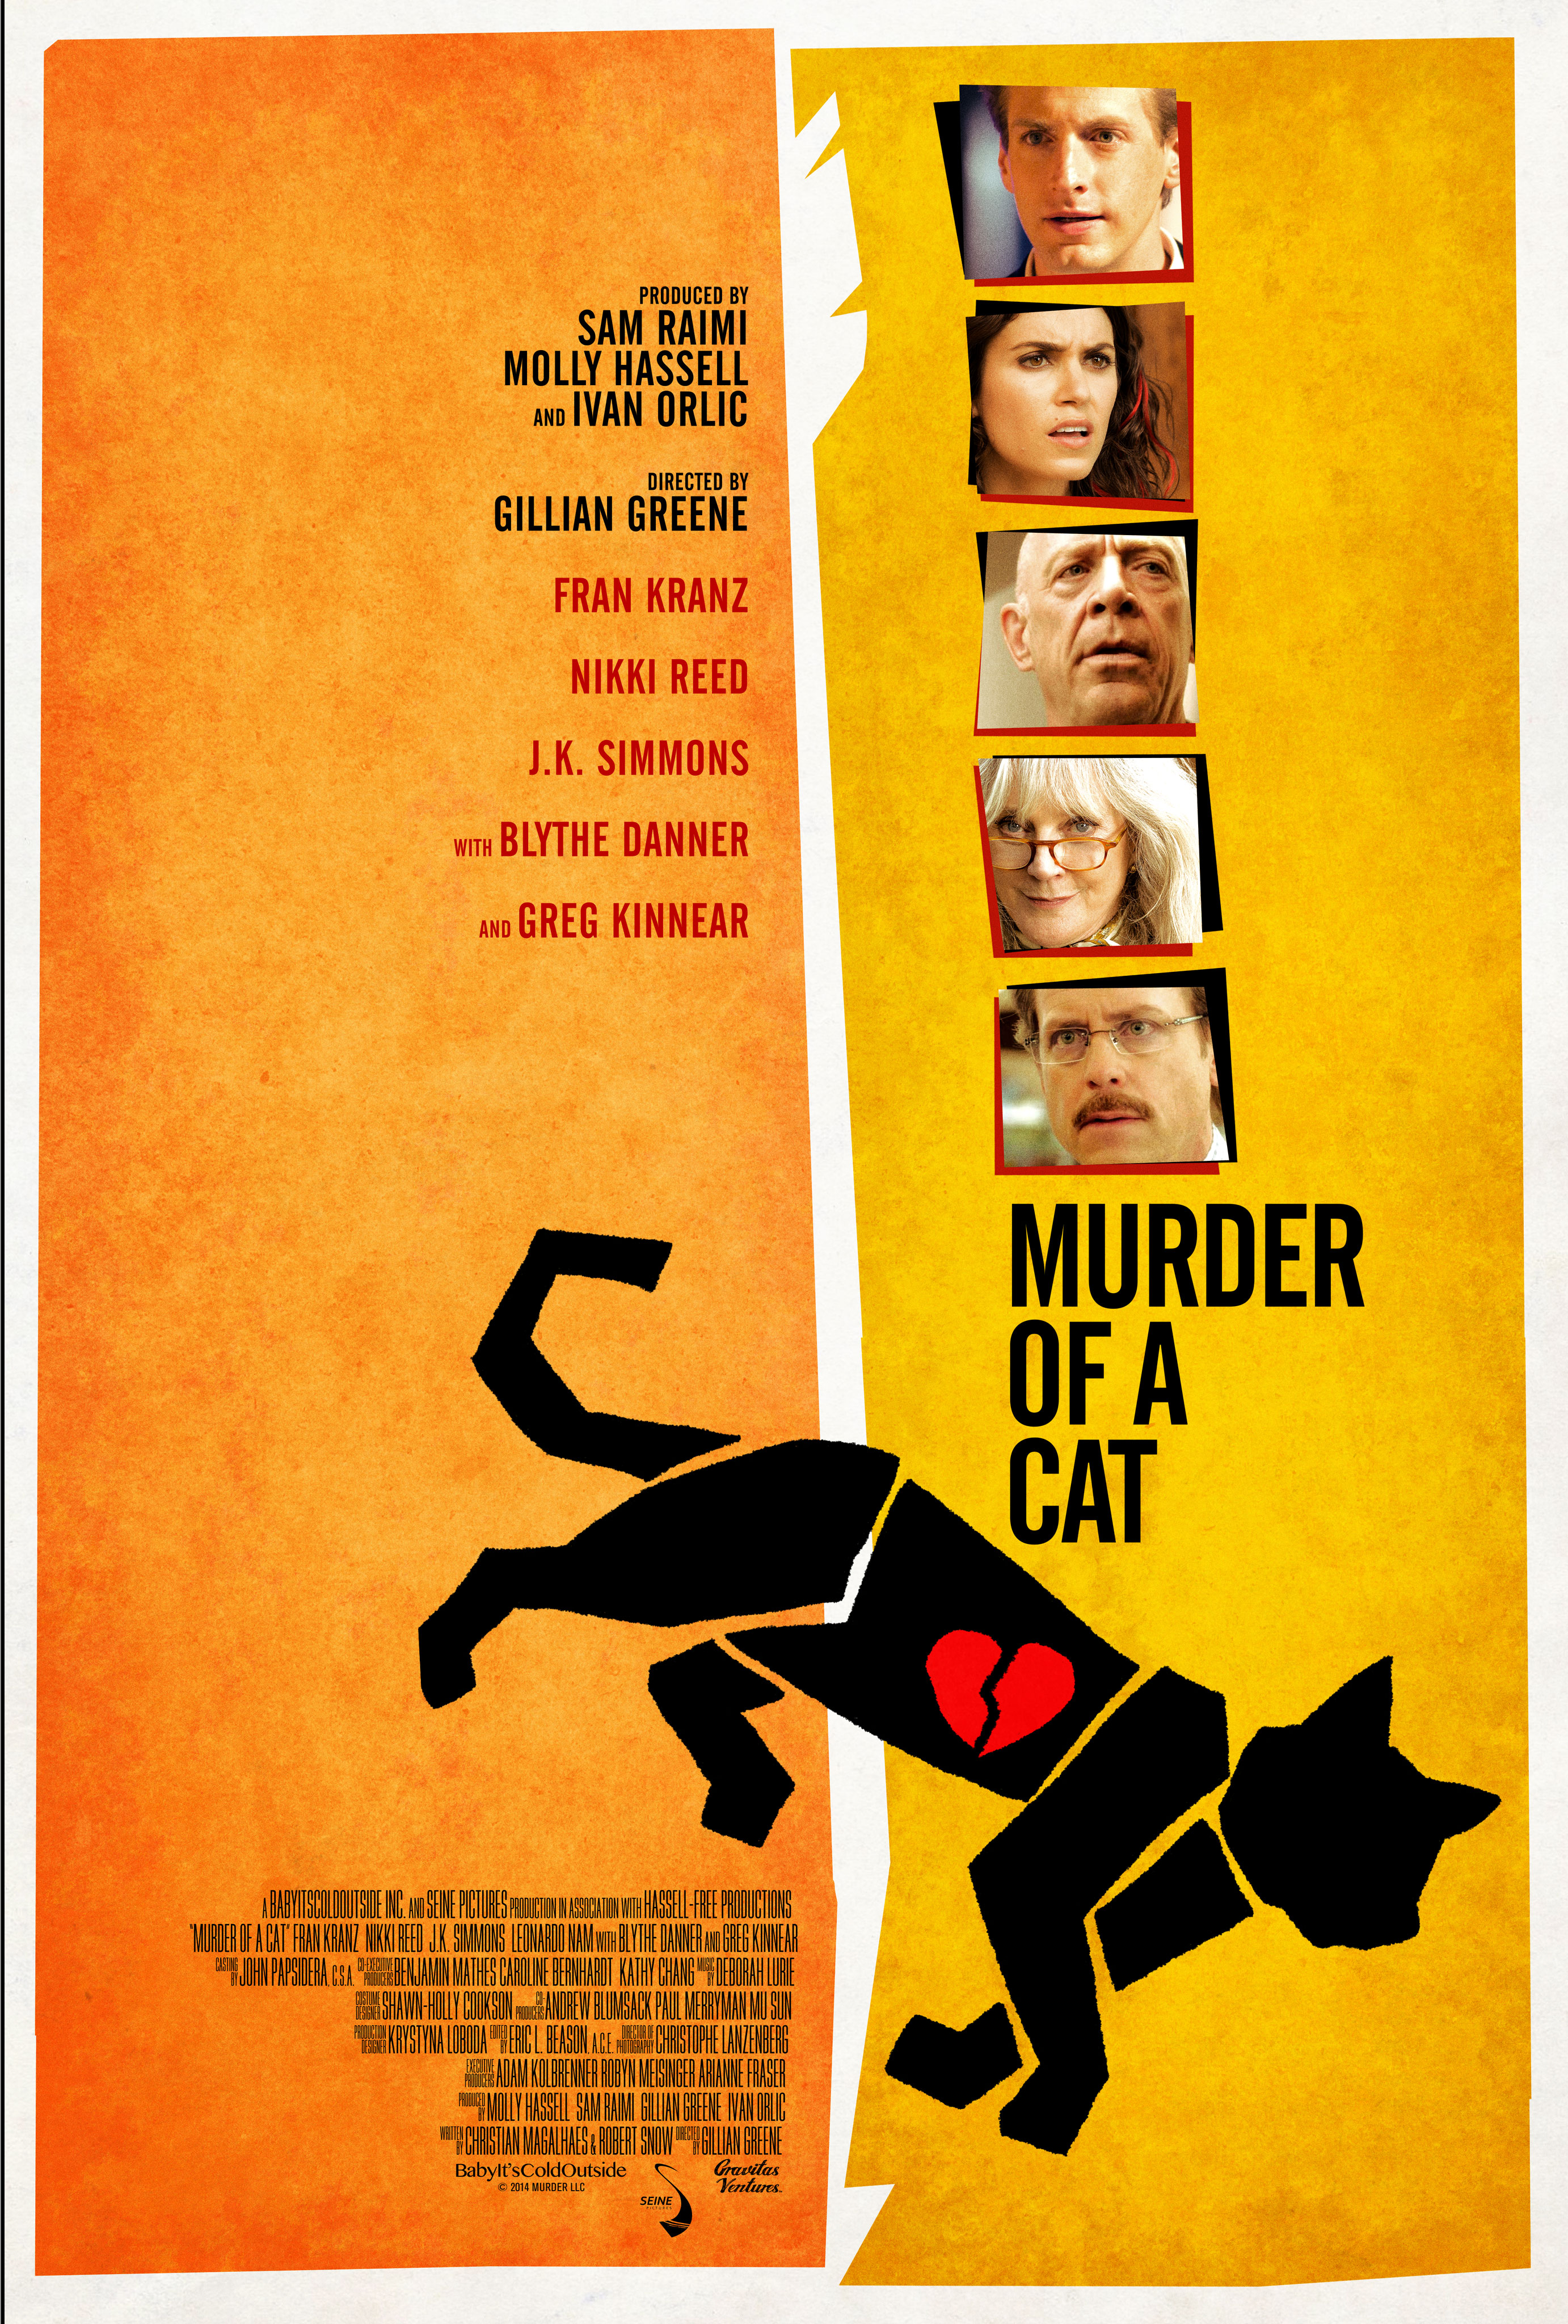 Blythe Danner, Greg Kinnear, Fran Kranz, J.K. Simmons and Nikki Reed in Murder of a Cat (2014)